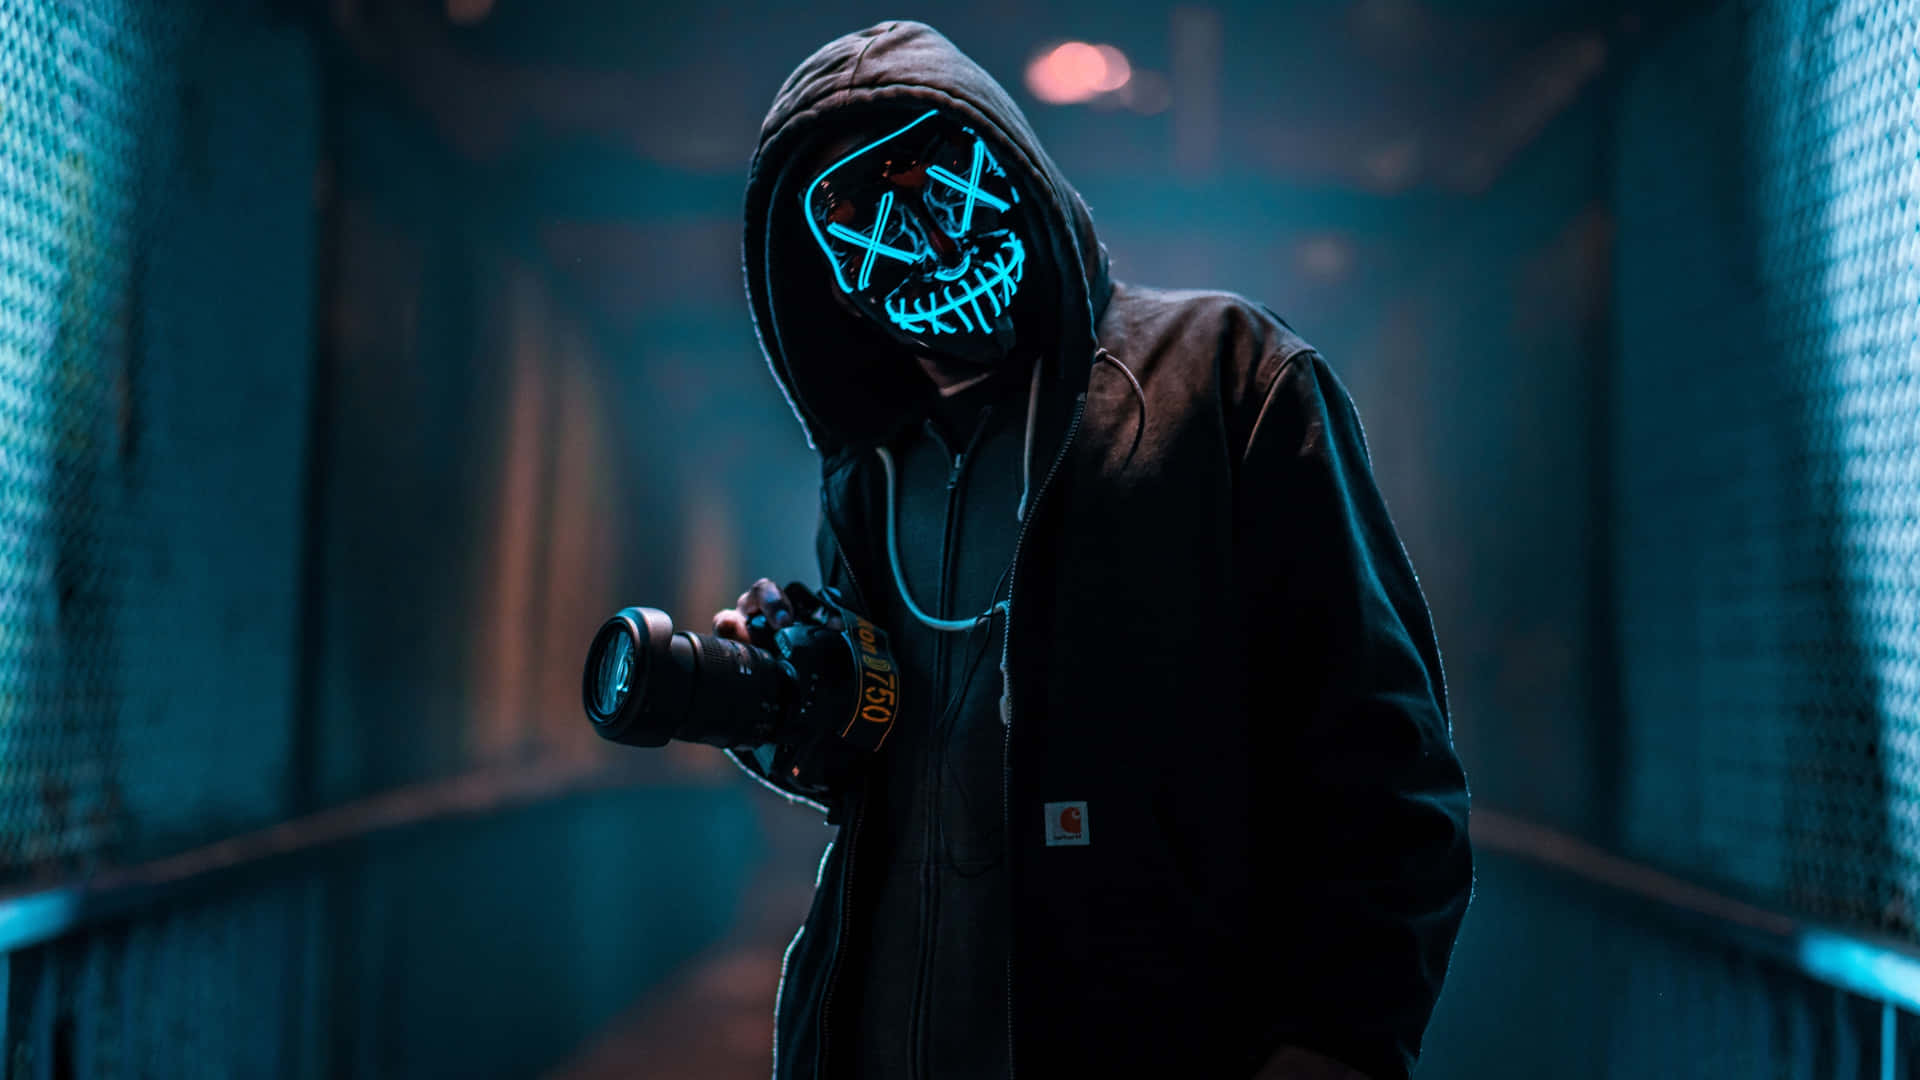 Neon Blue 4k Mask Anonymous Photographer